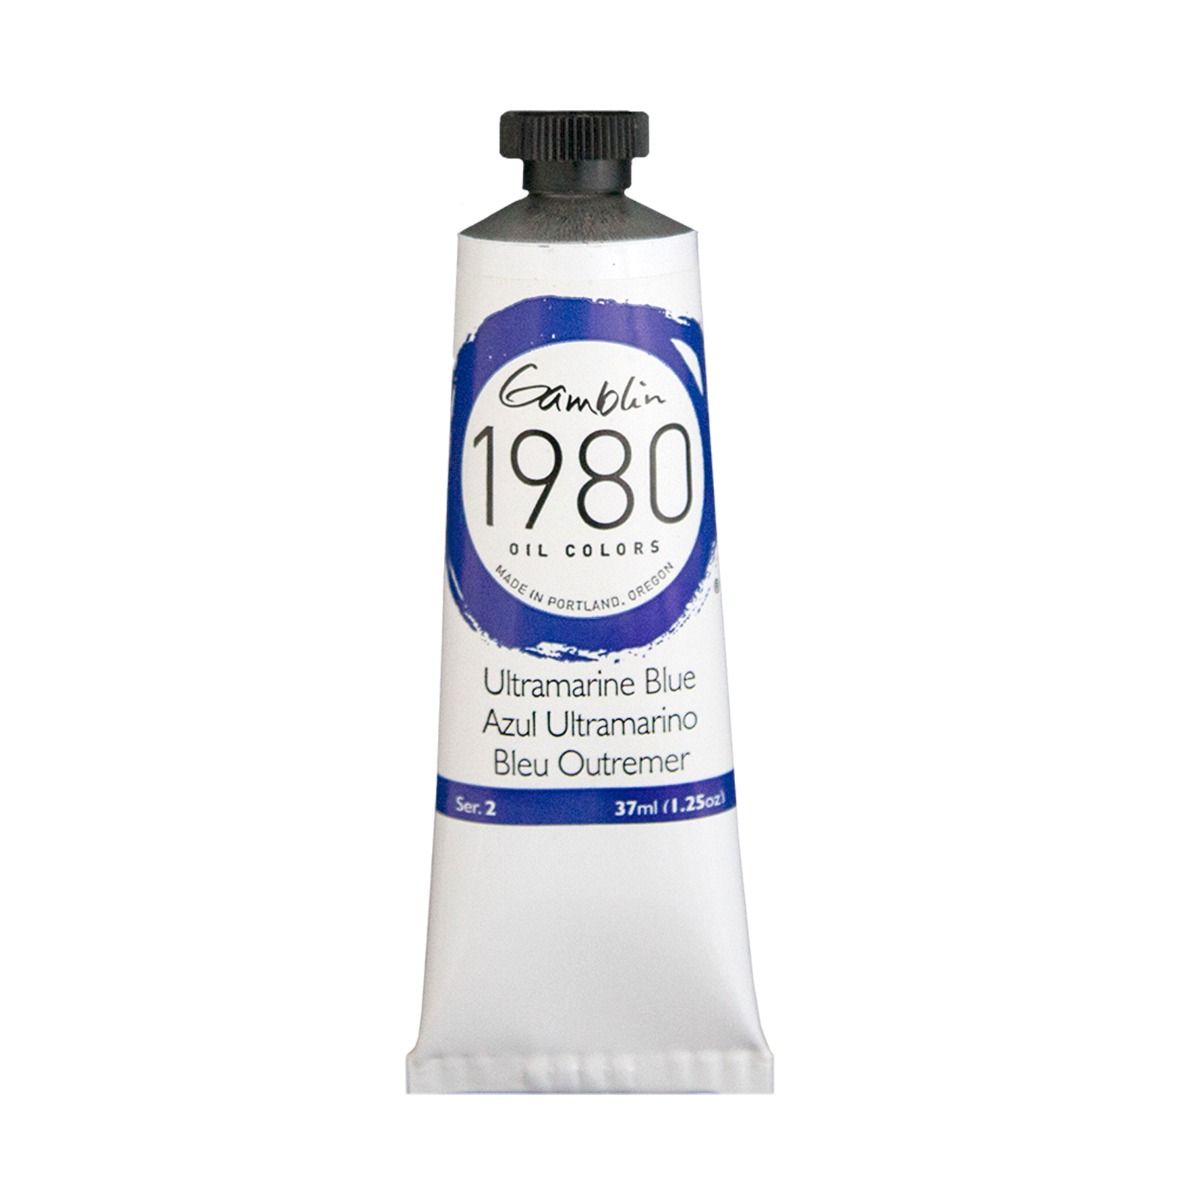 Gamblin 1980 Oils - Ultramarine Blue, 37 ml (1.25oz)